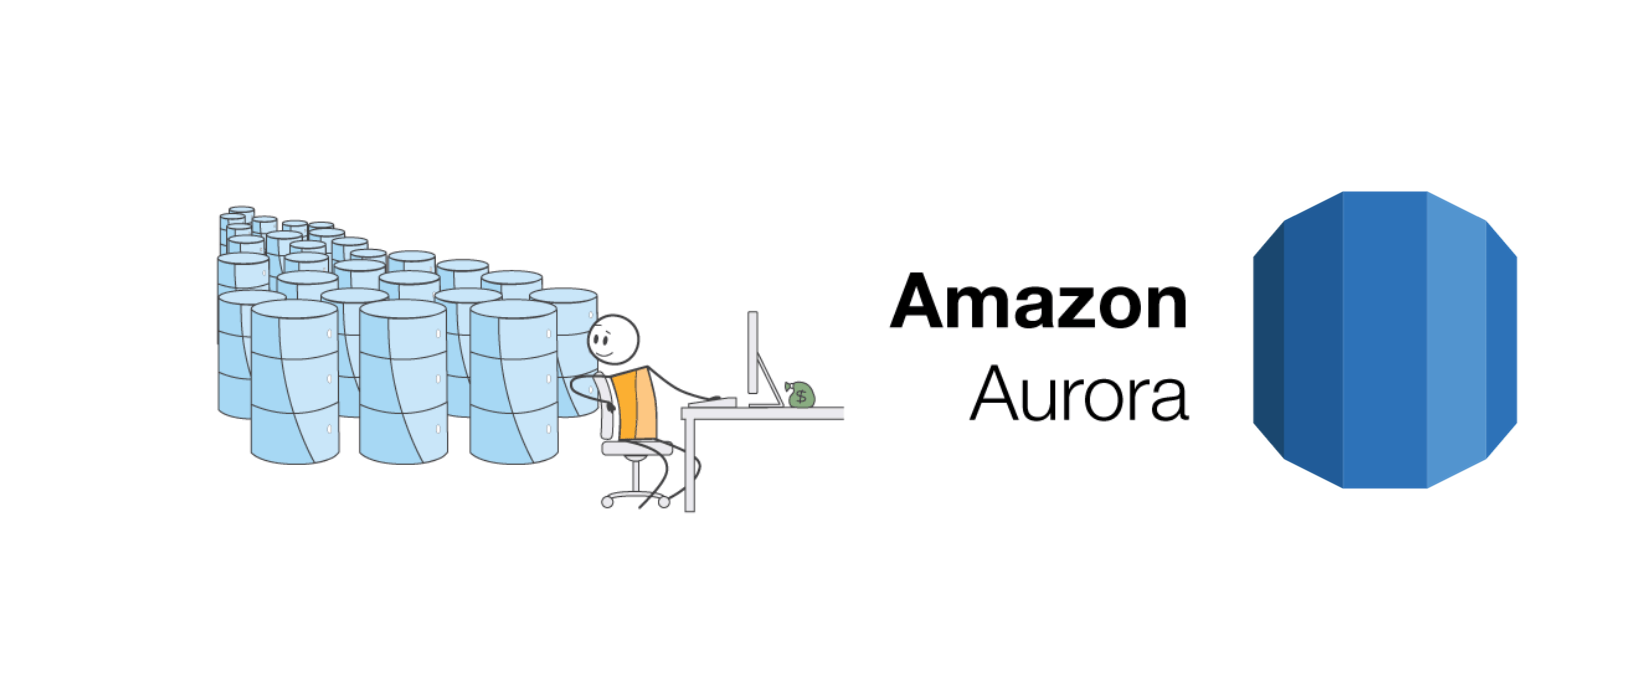 Amazon Aurora Service Introduction